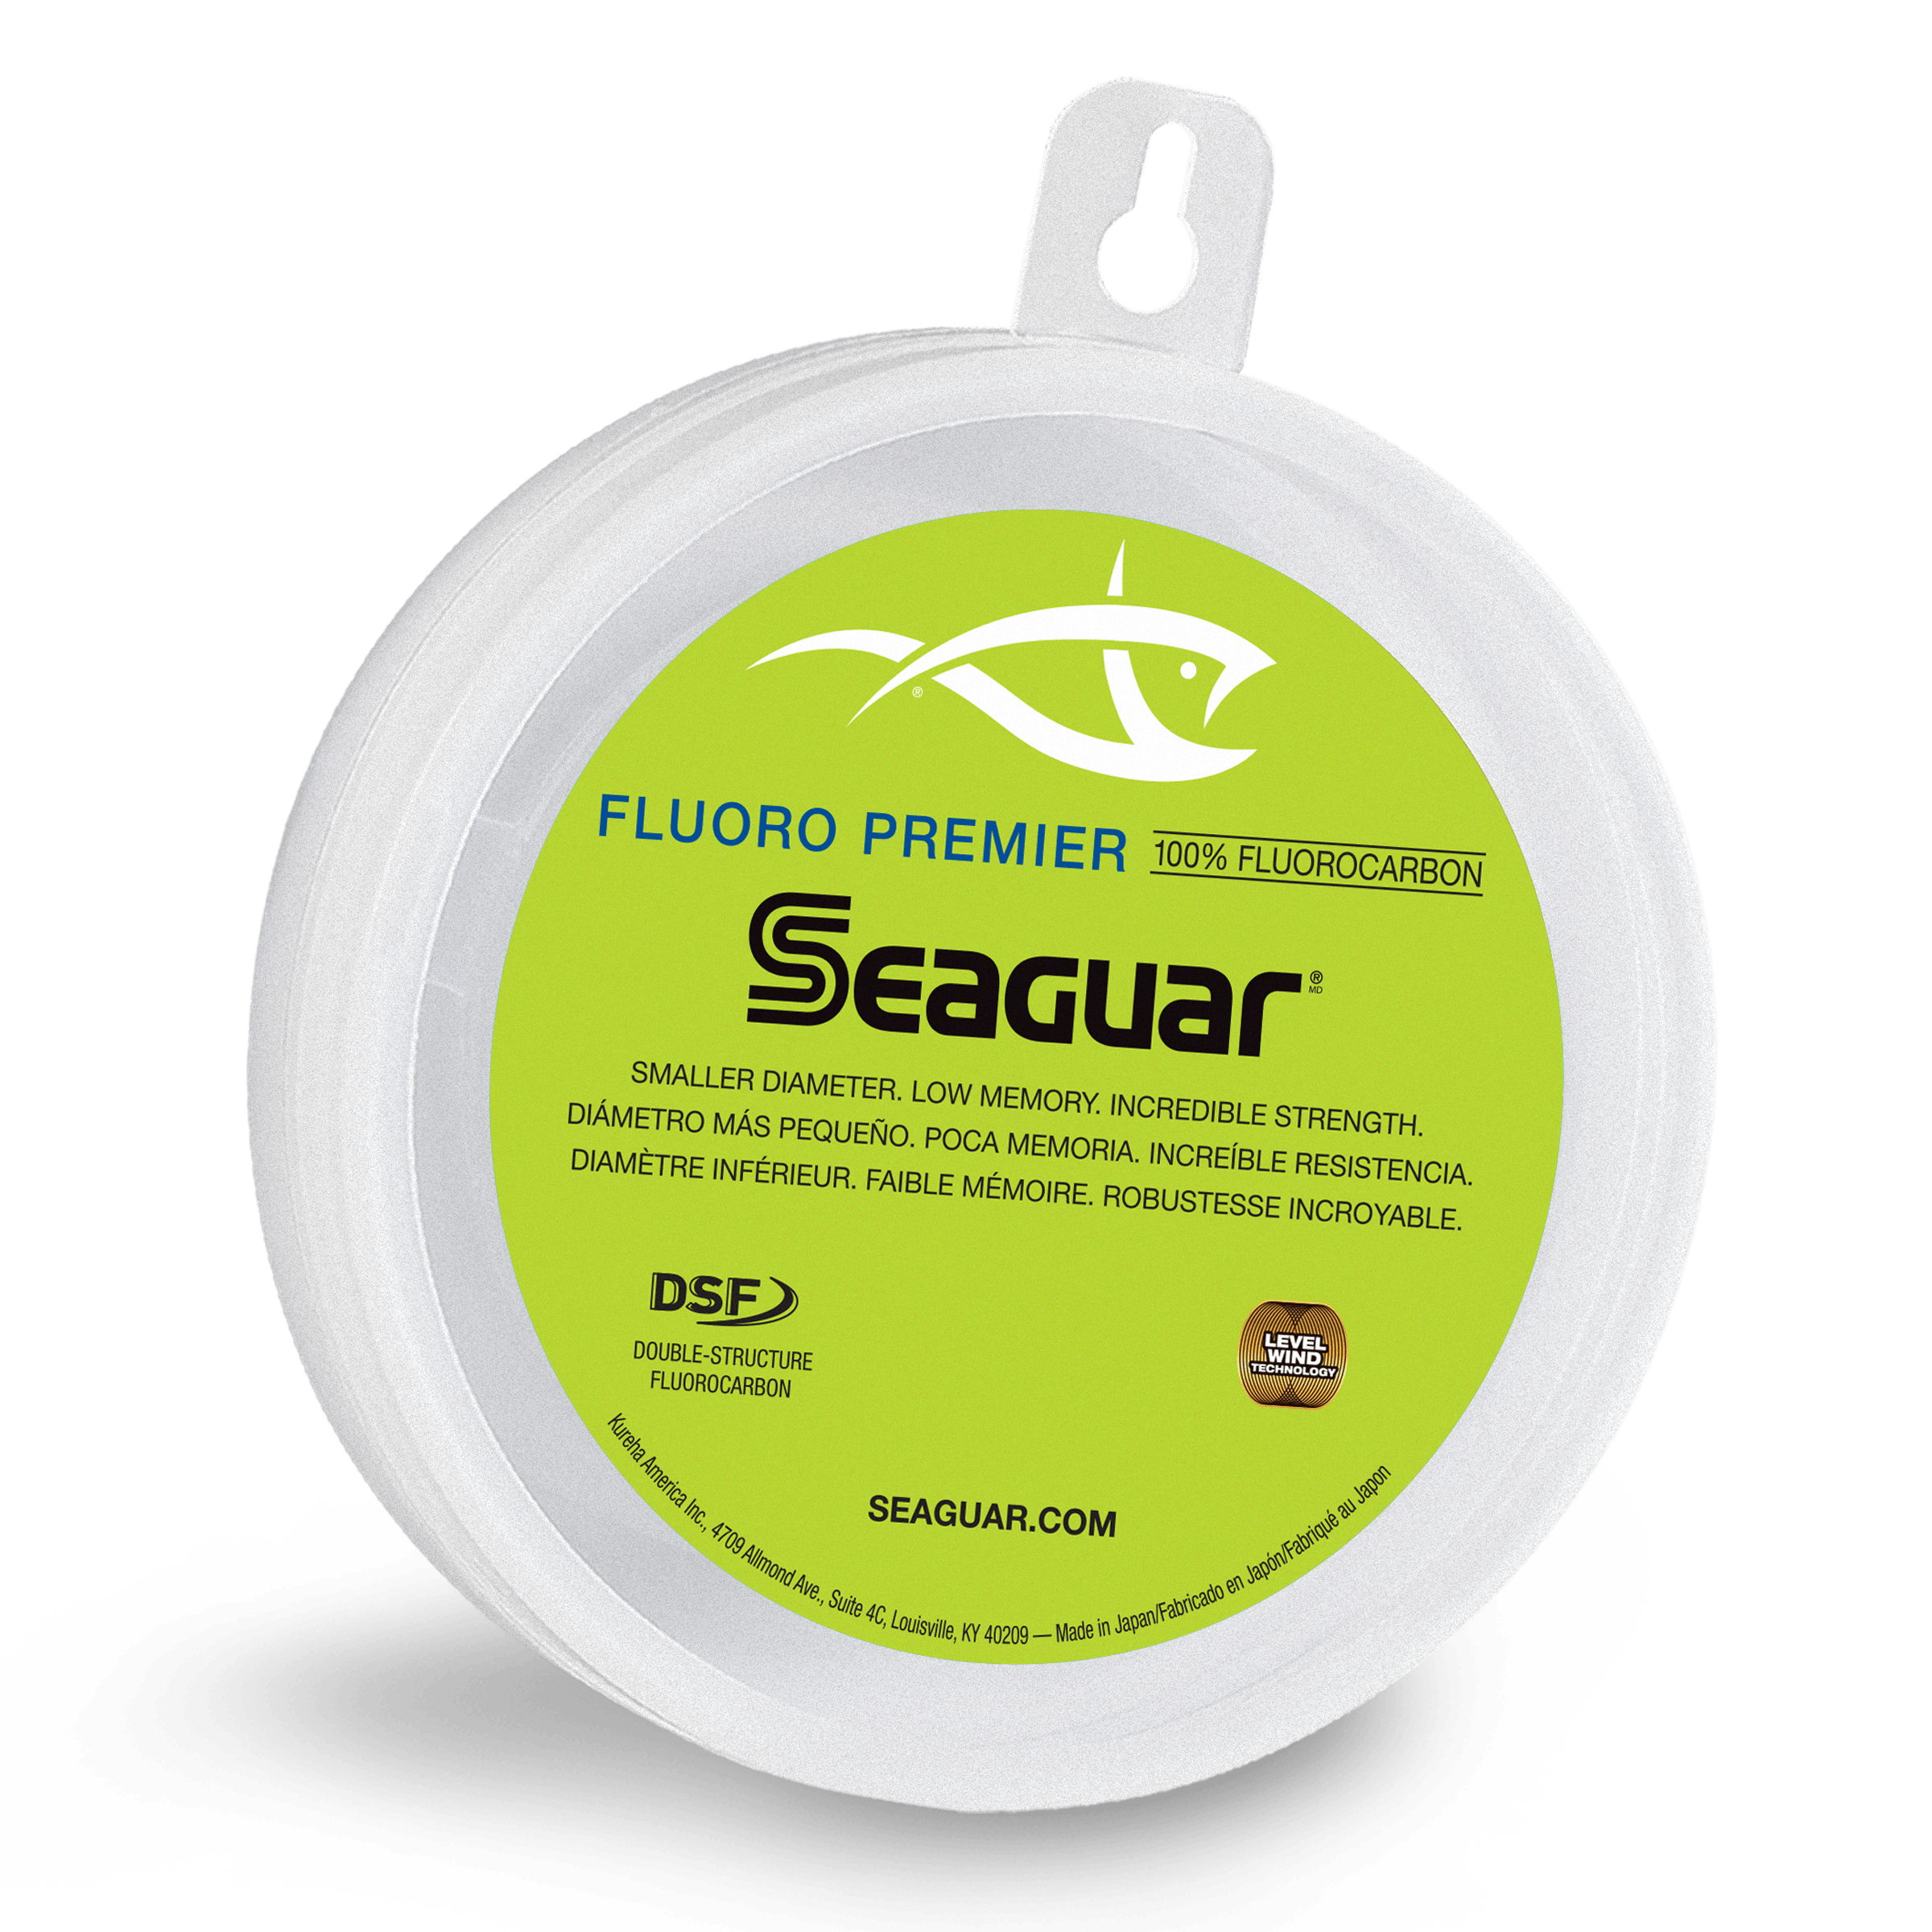 SEAGUAR Manyu Premium 30m Fluorocarbon Leader (New Packaging